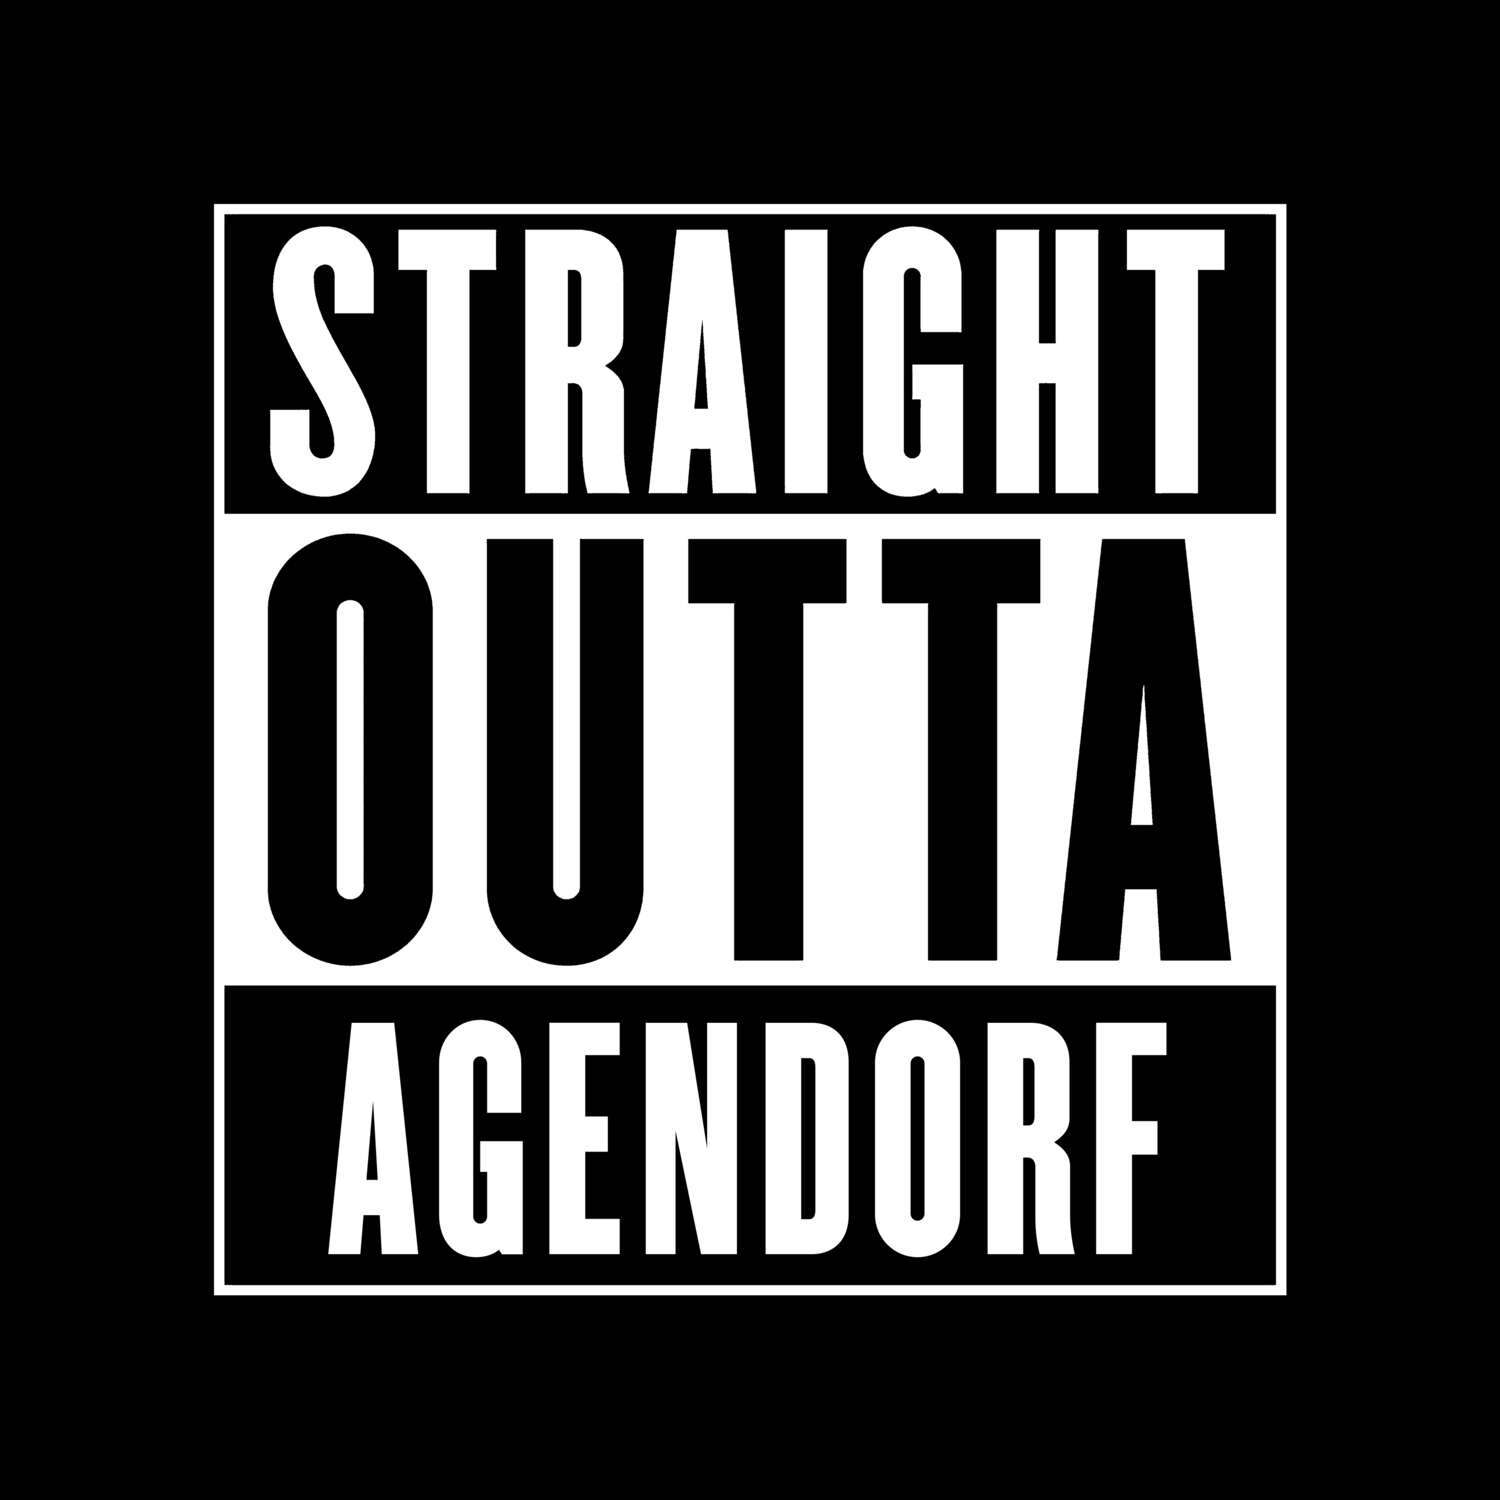 Agendorf T-Shirt »Straight Outta«